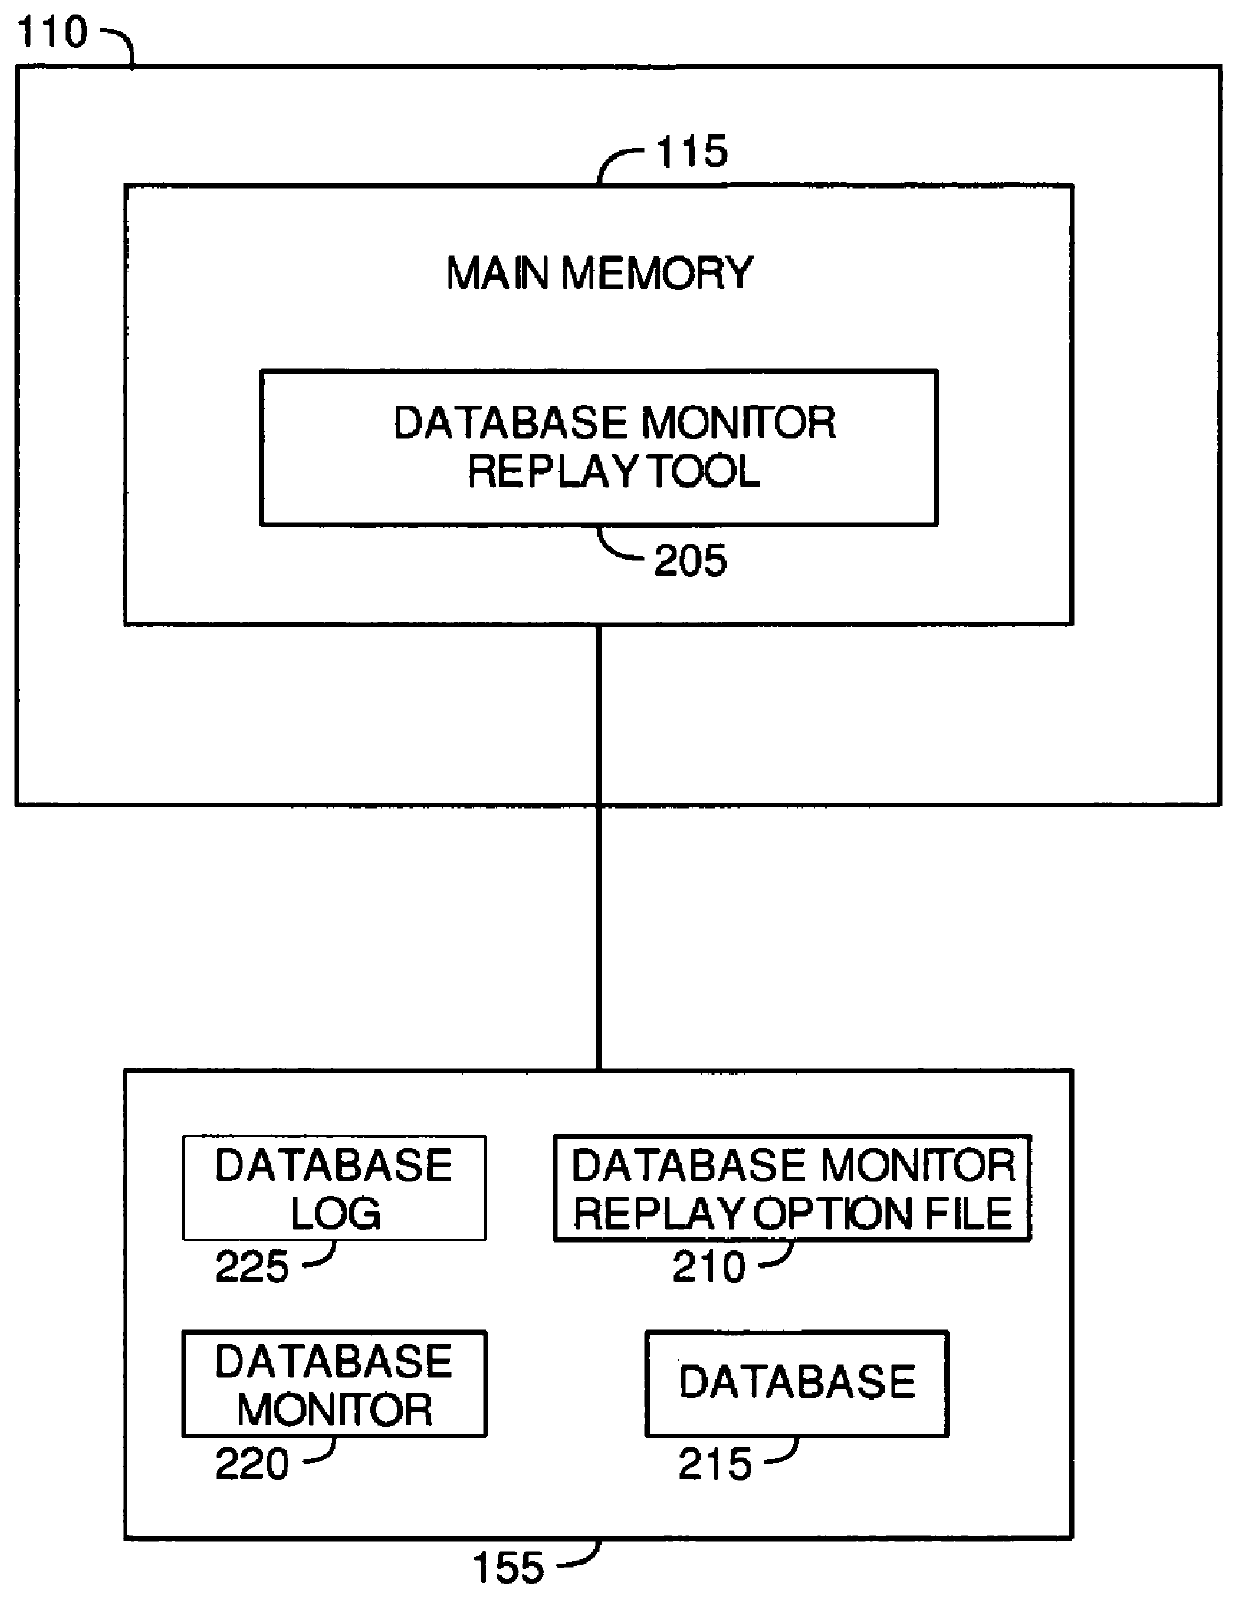 Database monitor replay